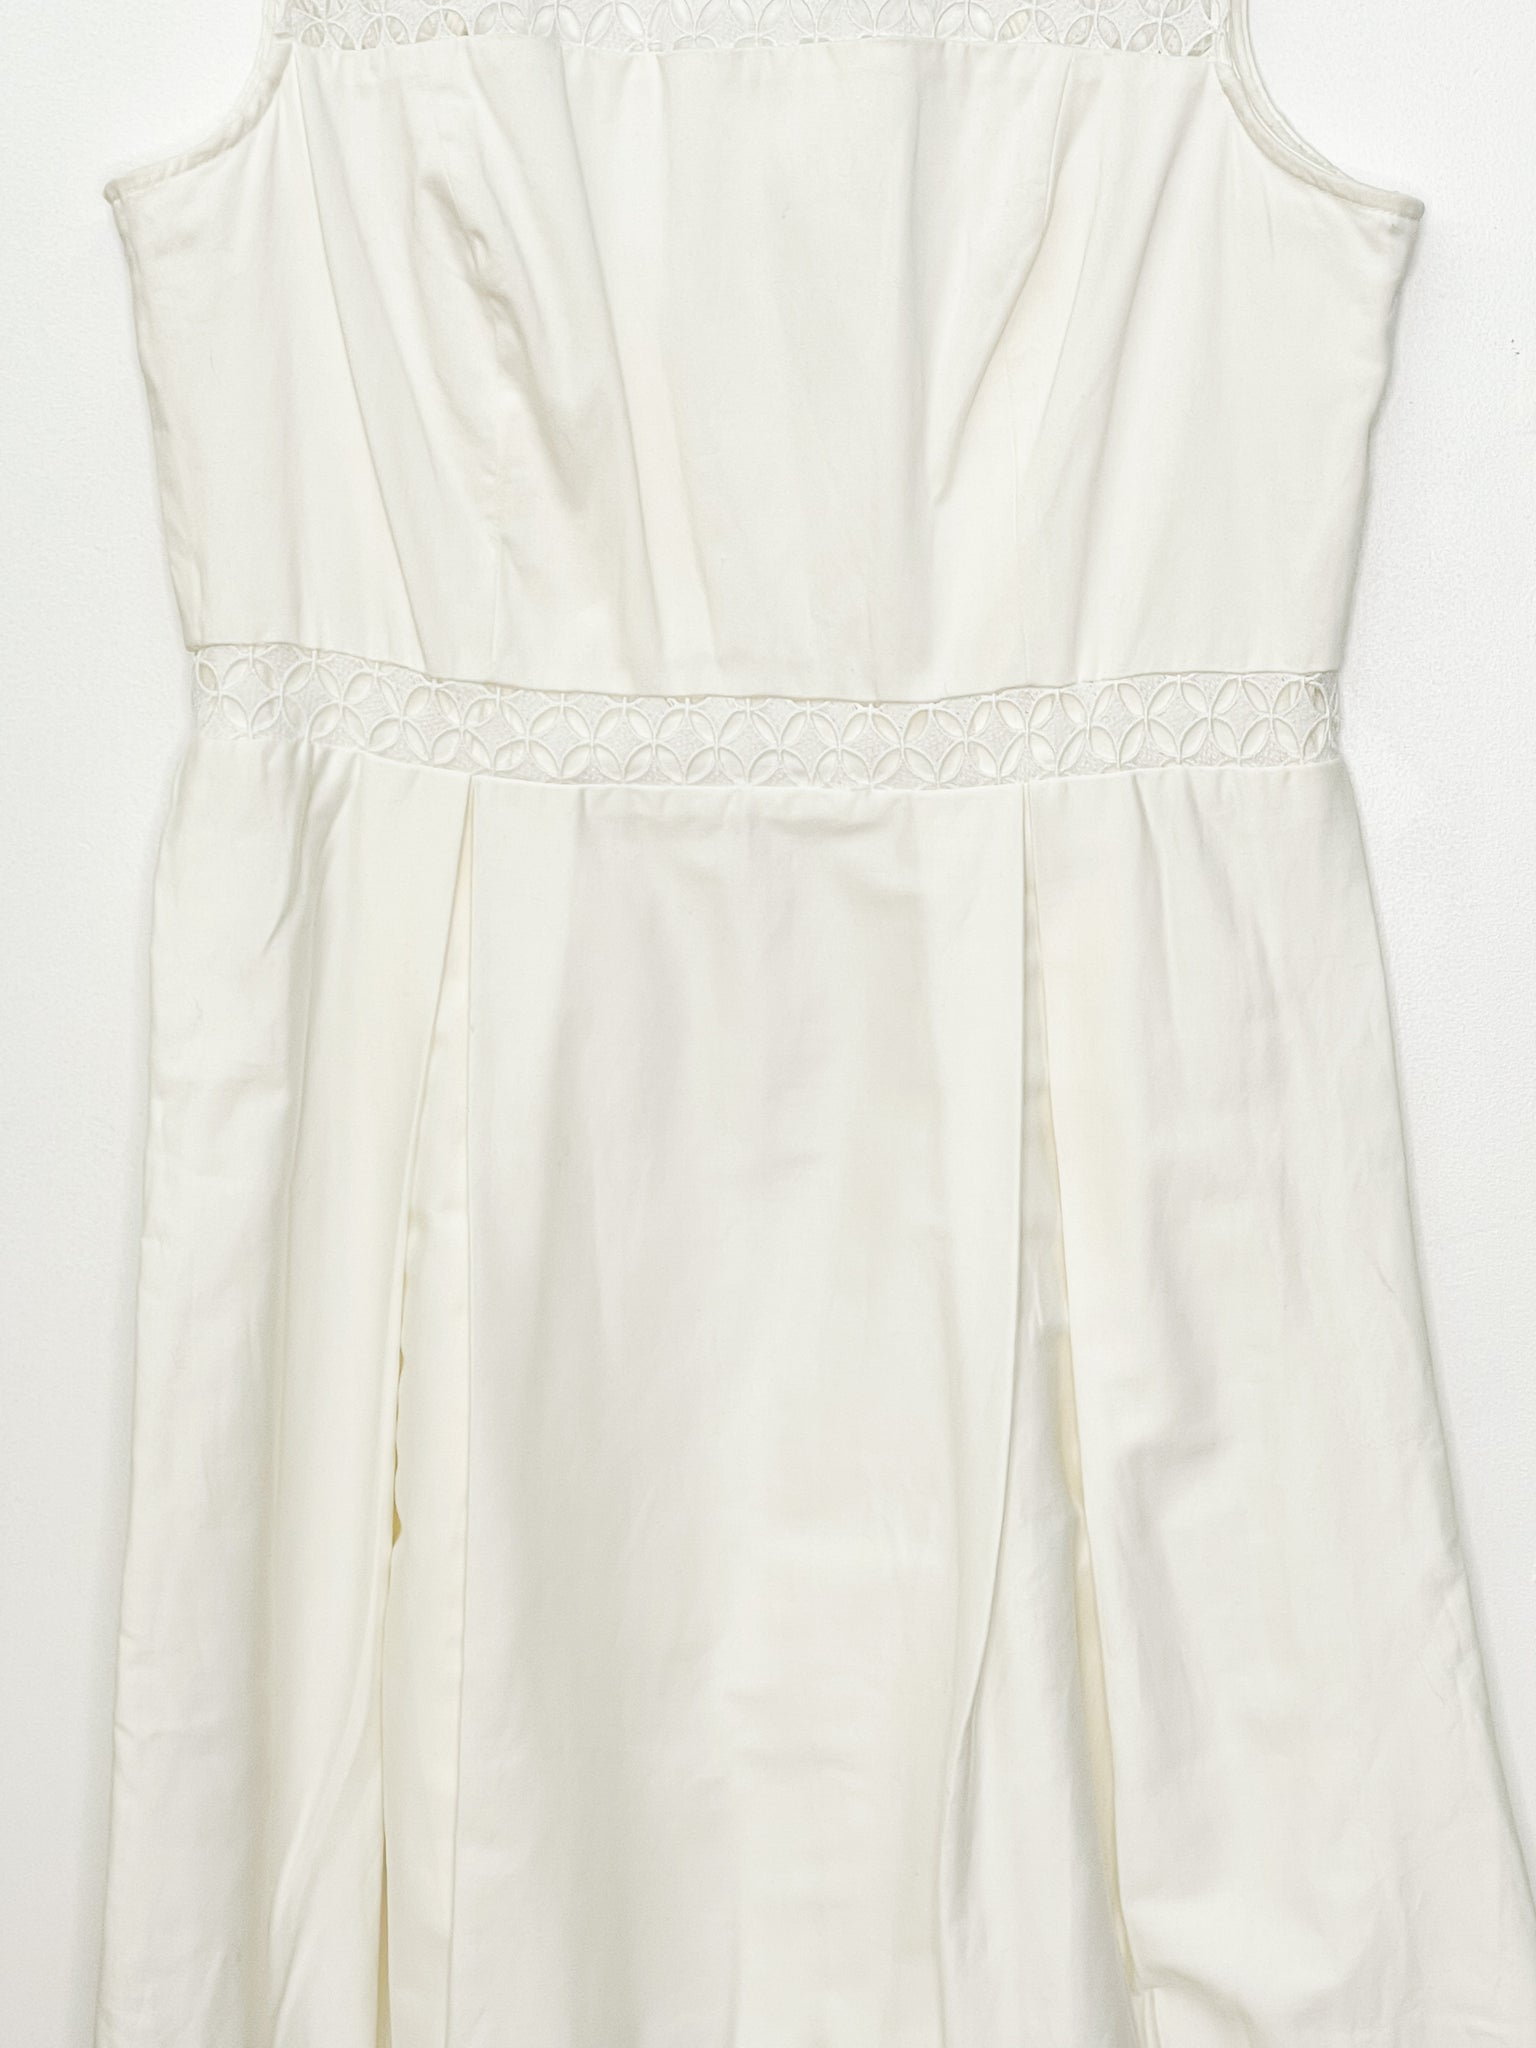 Calvin Klein Ivory Eyelet Sundays Dress Size 12 | Monarch Thrift Shop